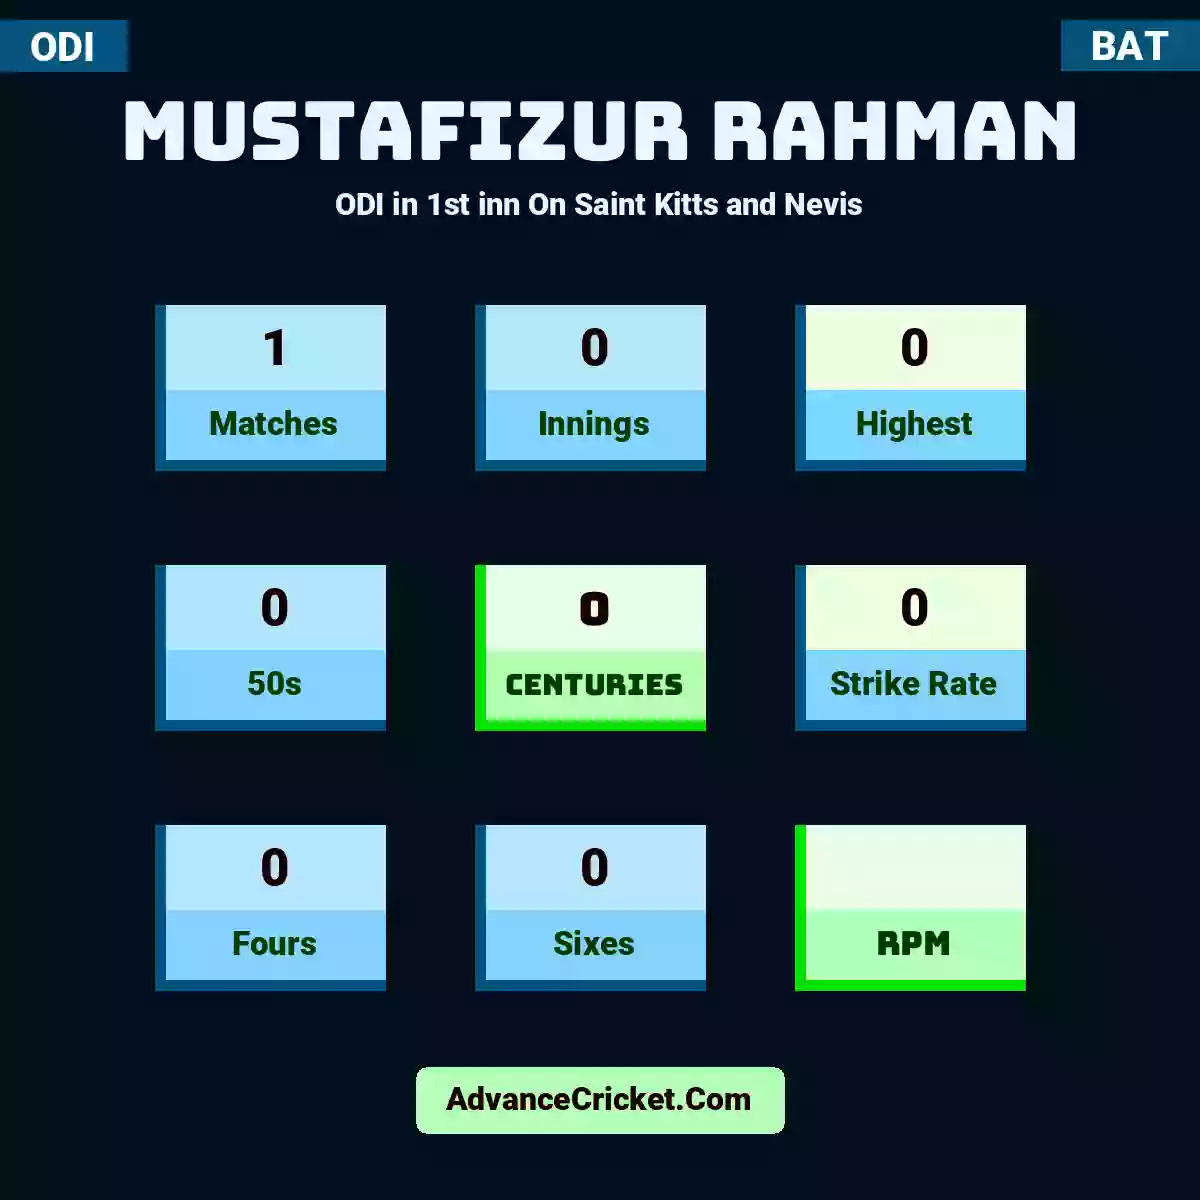 Mustafizur Rahman ODI  in 1st inn On Saint Kitts and Nevis, Mustafizur Rahman played 1 matches, scored 0 runs as highest, 0 half-centuries, and 0 centuries, with a strike rate of 0. M.Rahman hit 0 fours and 0 sixes.